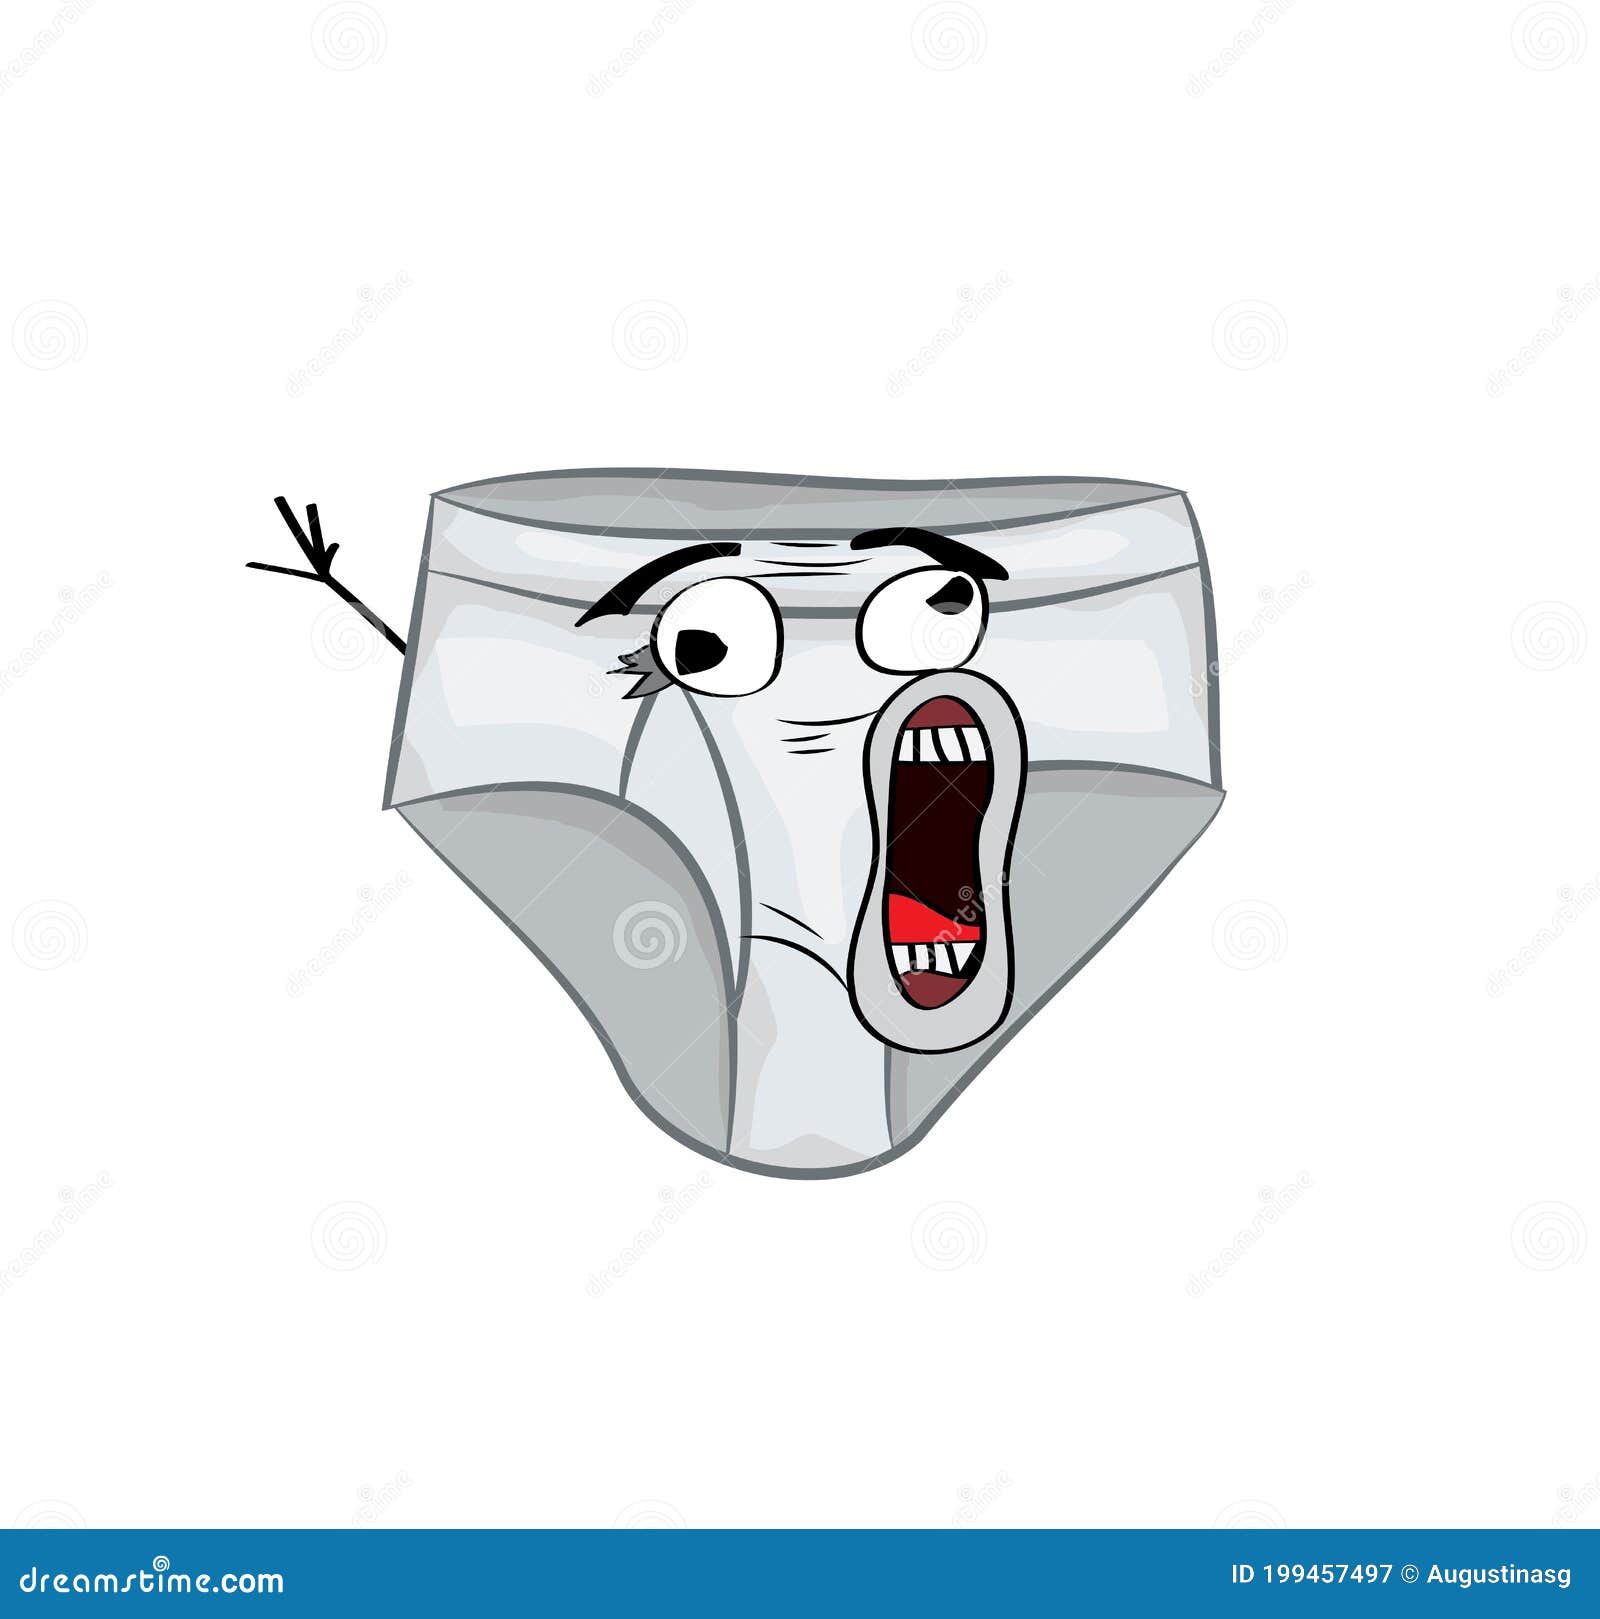 Crazy Internet Meme Illustration of Men Underwear Boxers Stock